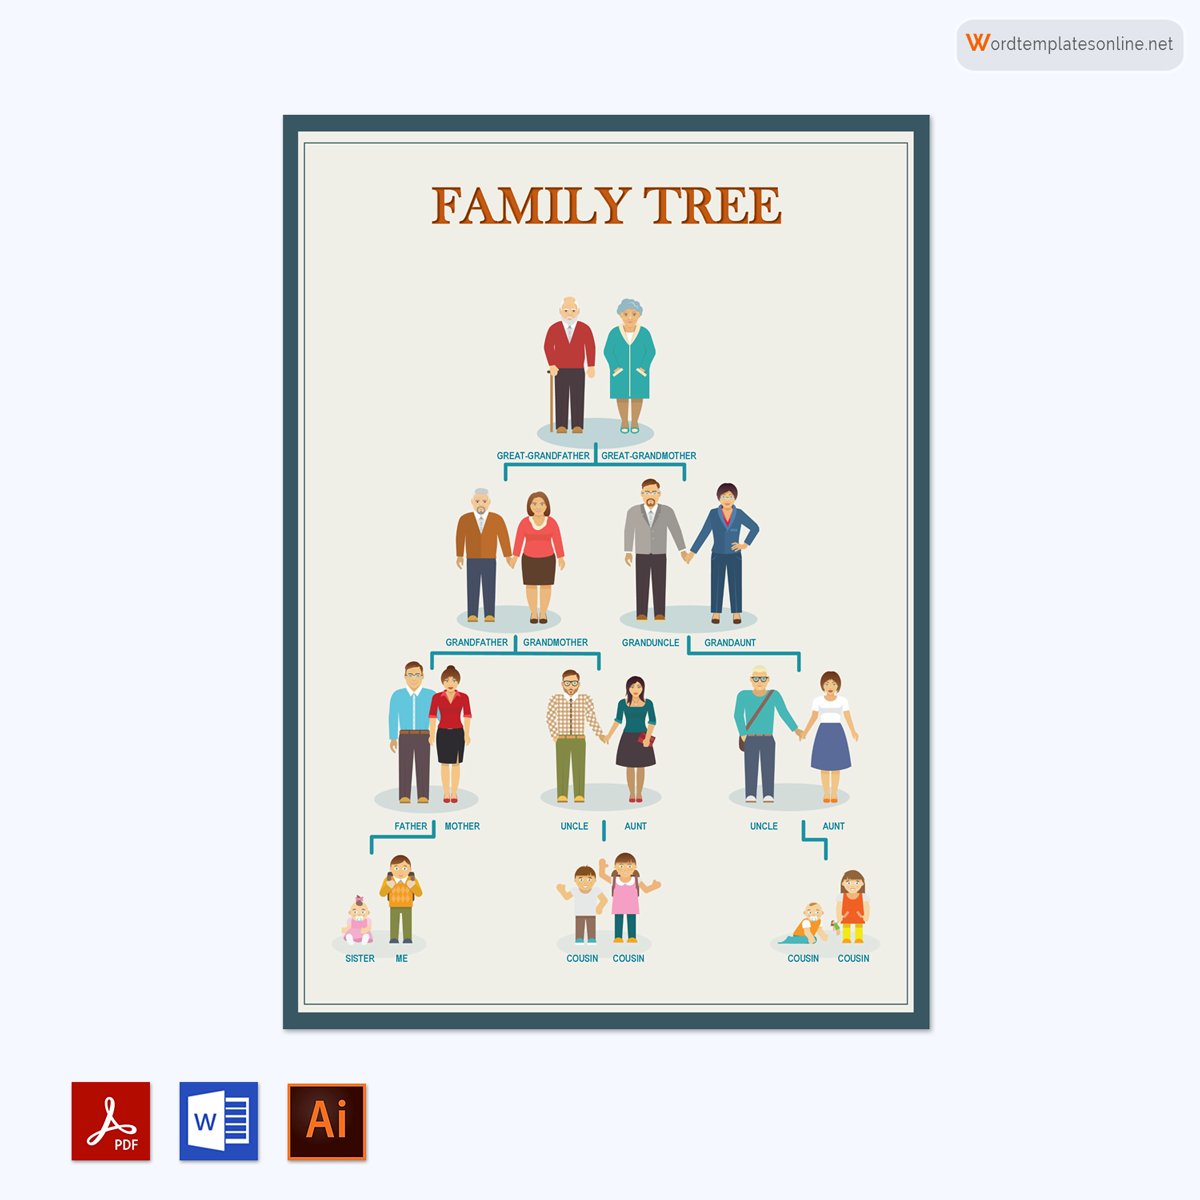 Printable family tree template - Editable and customizable